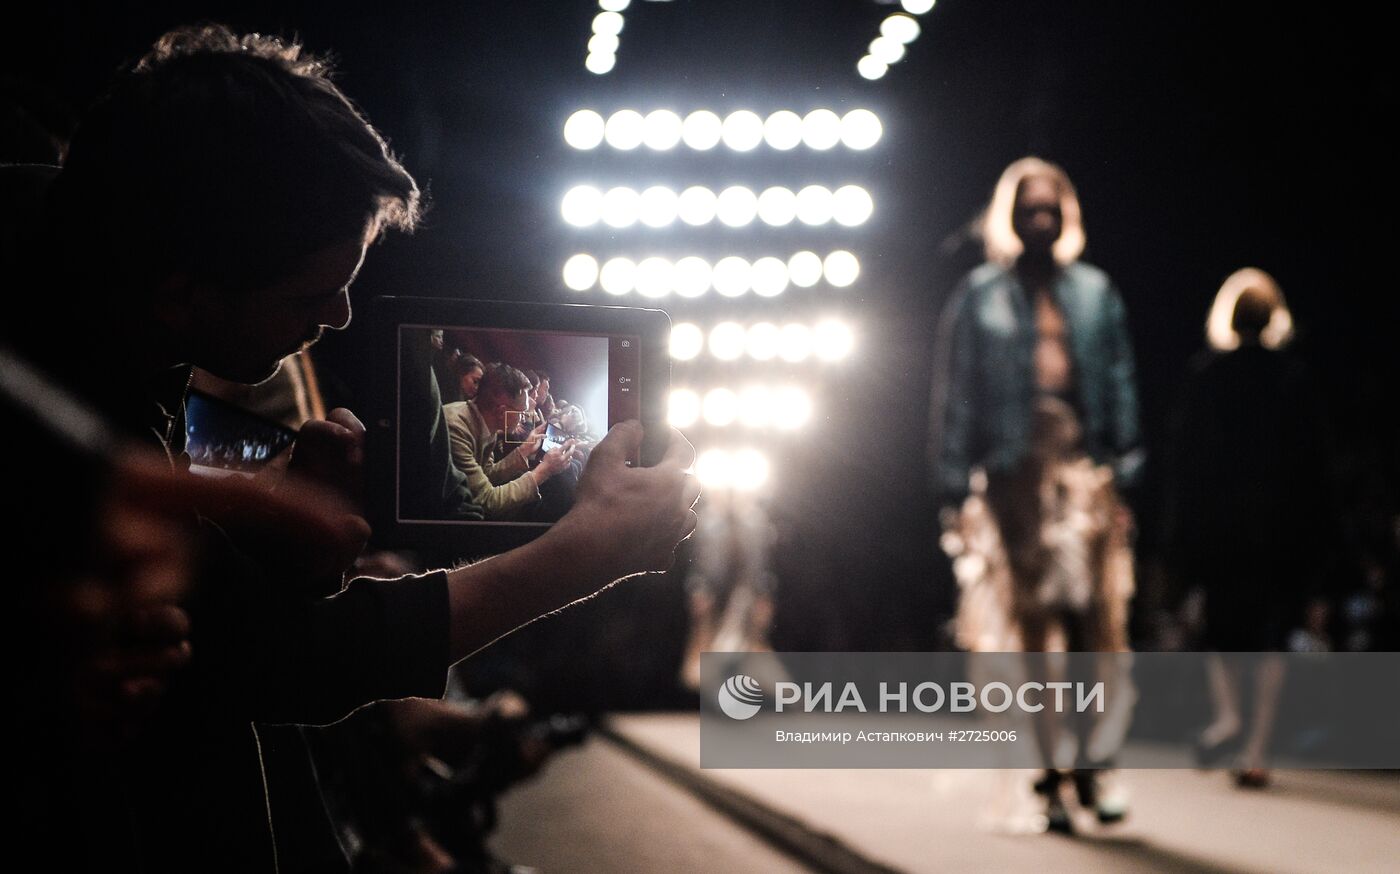 Неделя моды Mercedes-Benz Fashion Week Russia. День третий